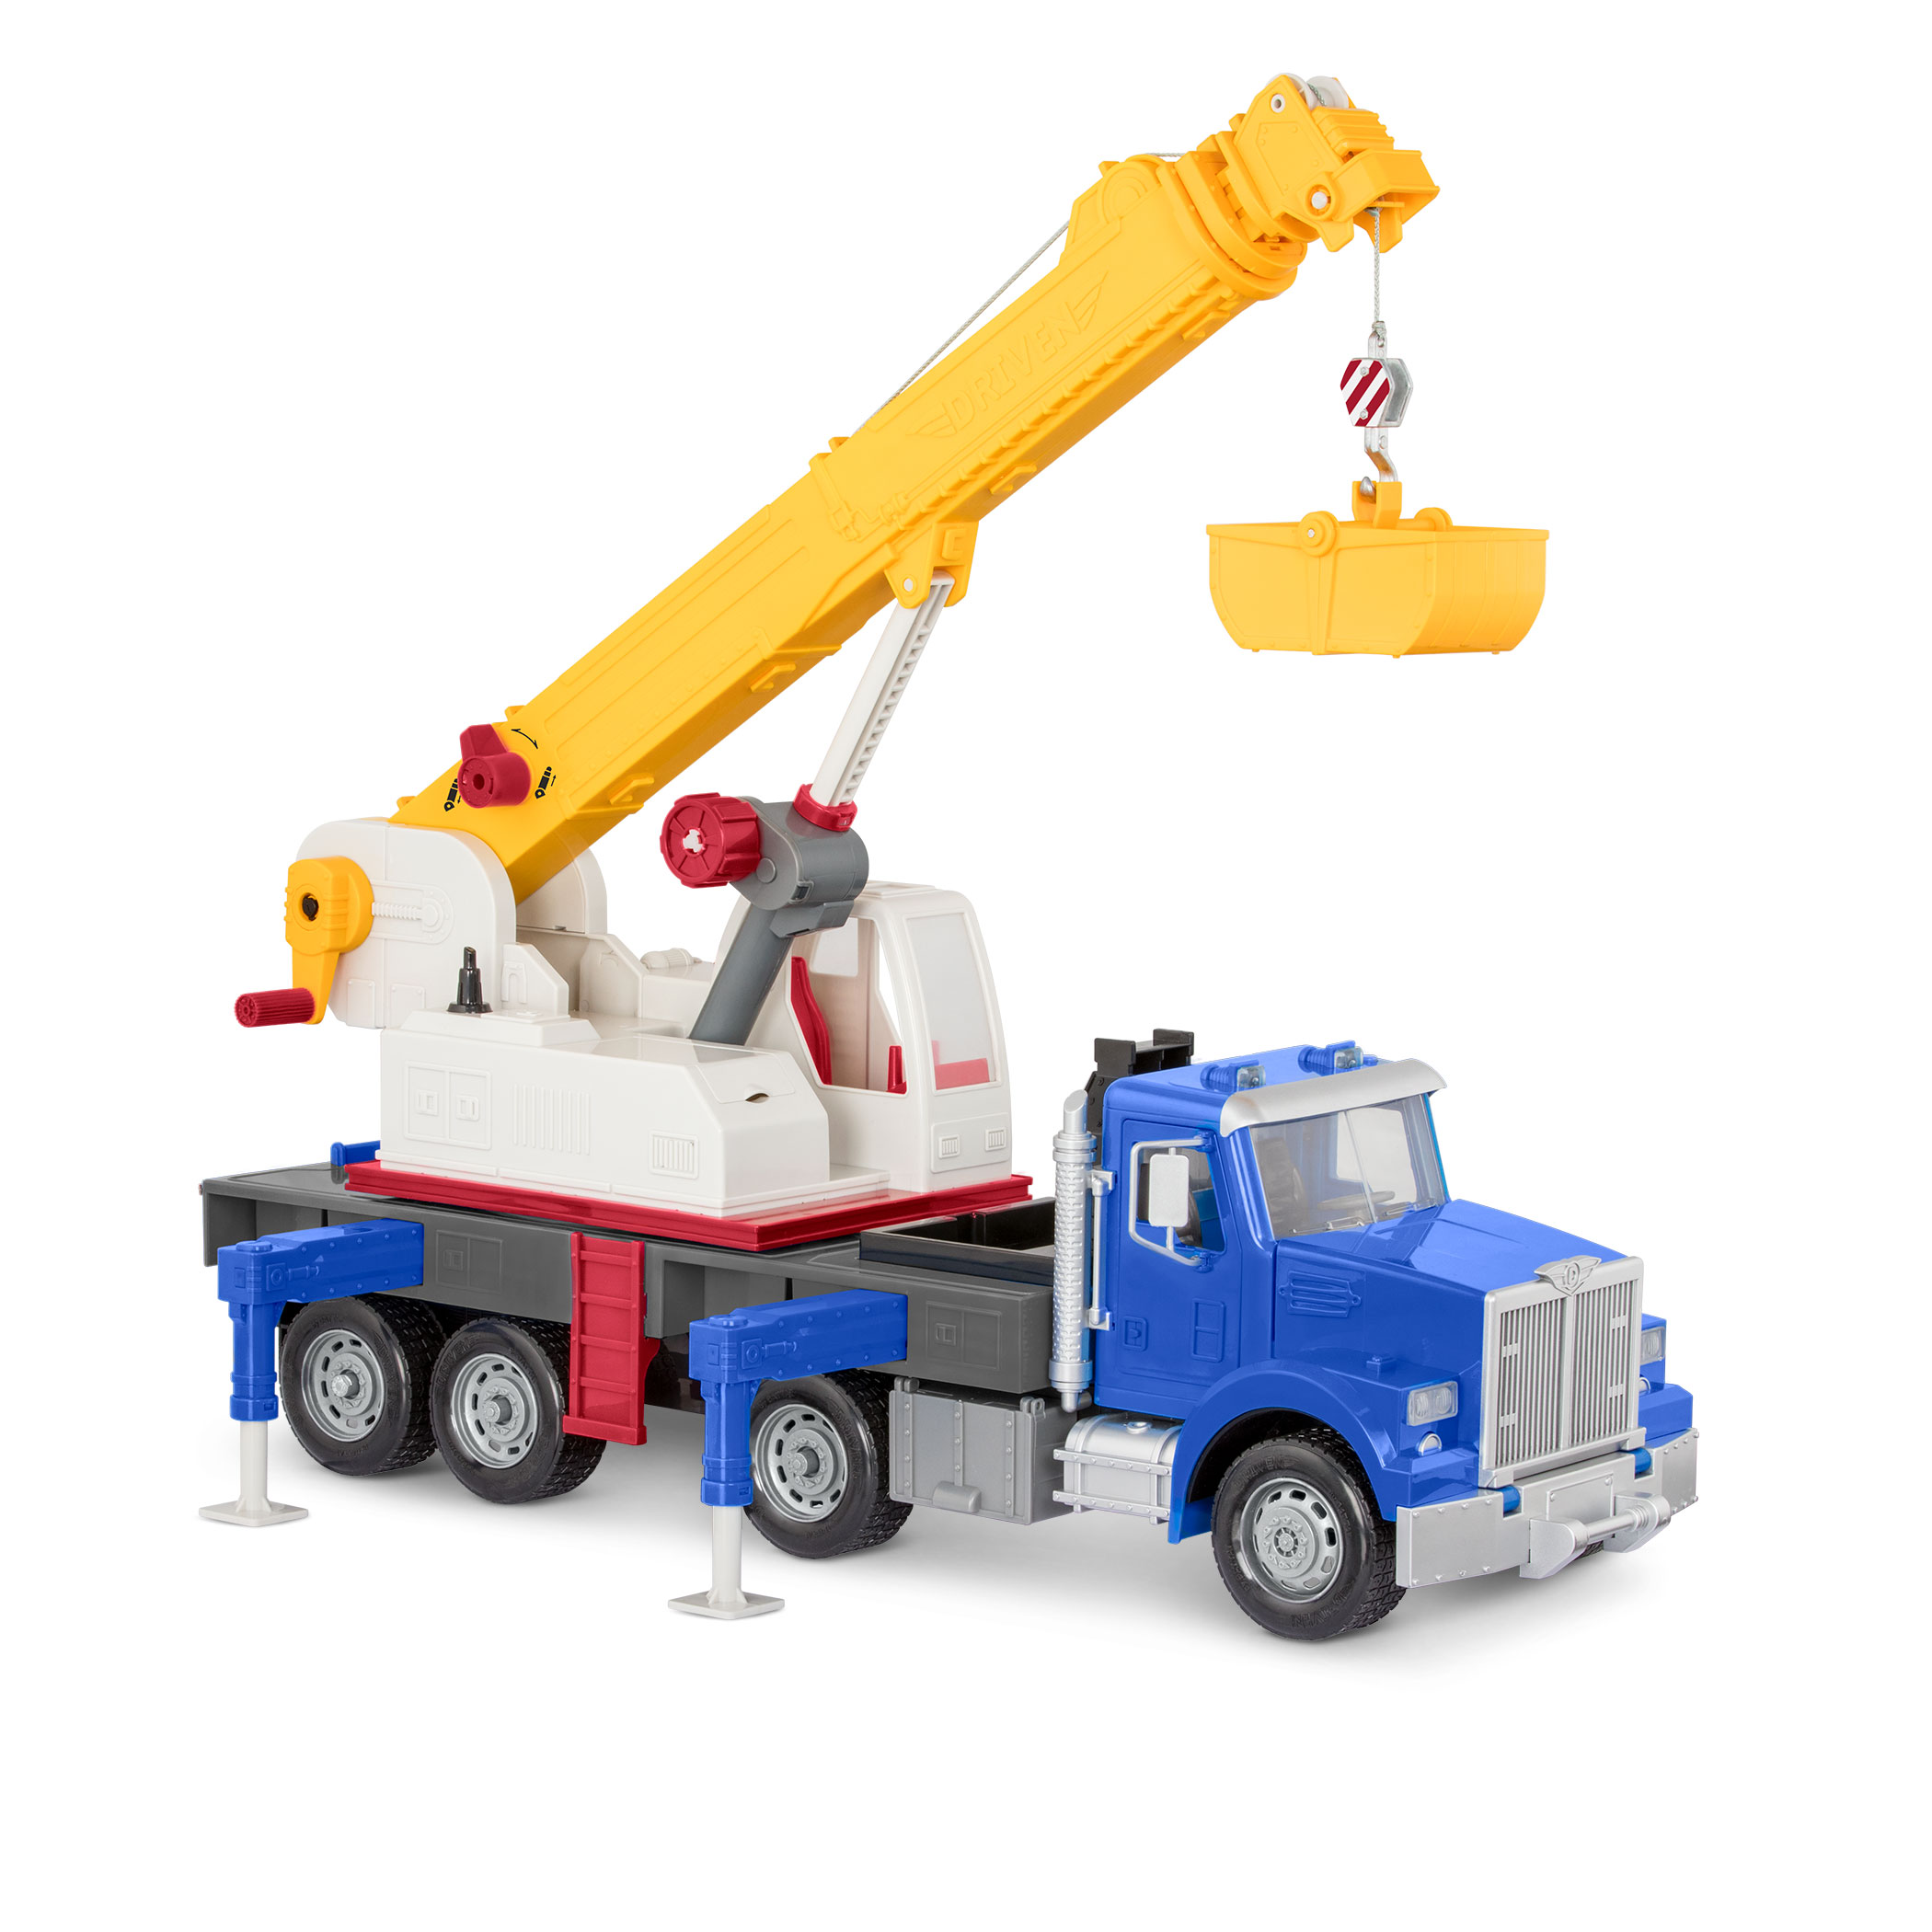 blue crane toy